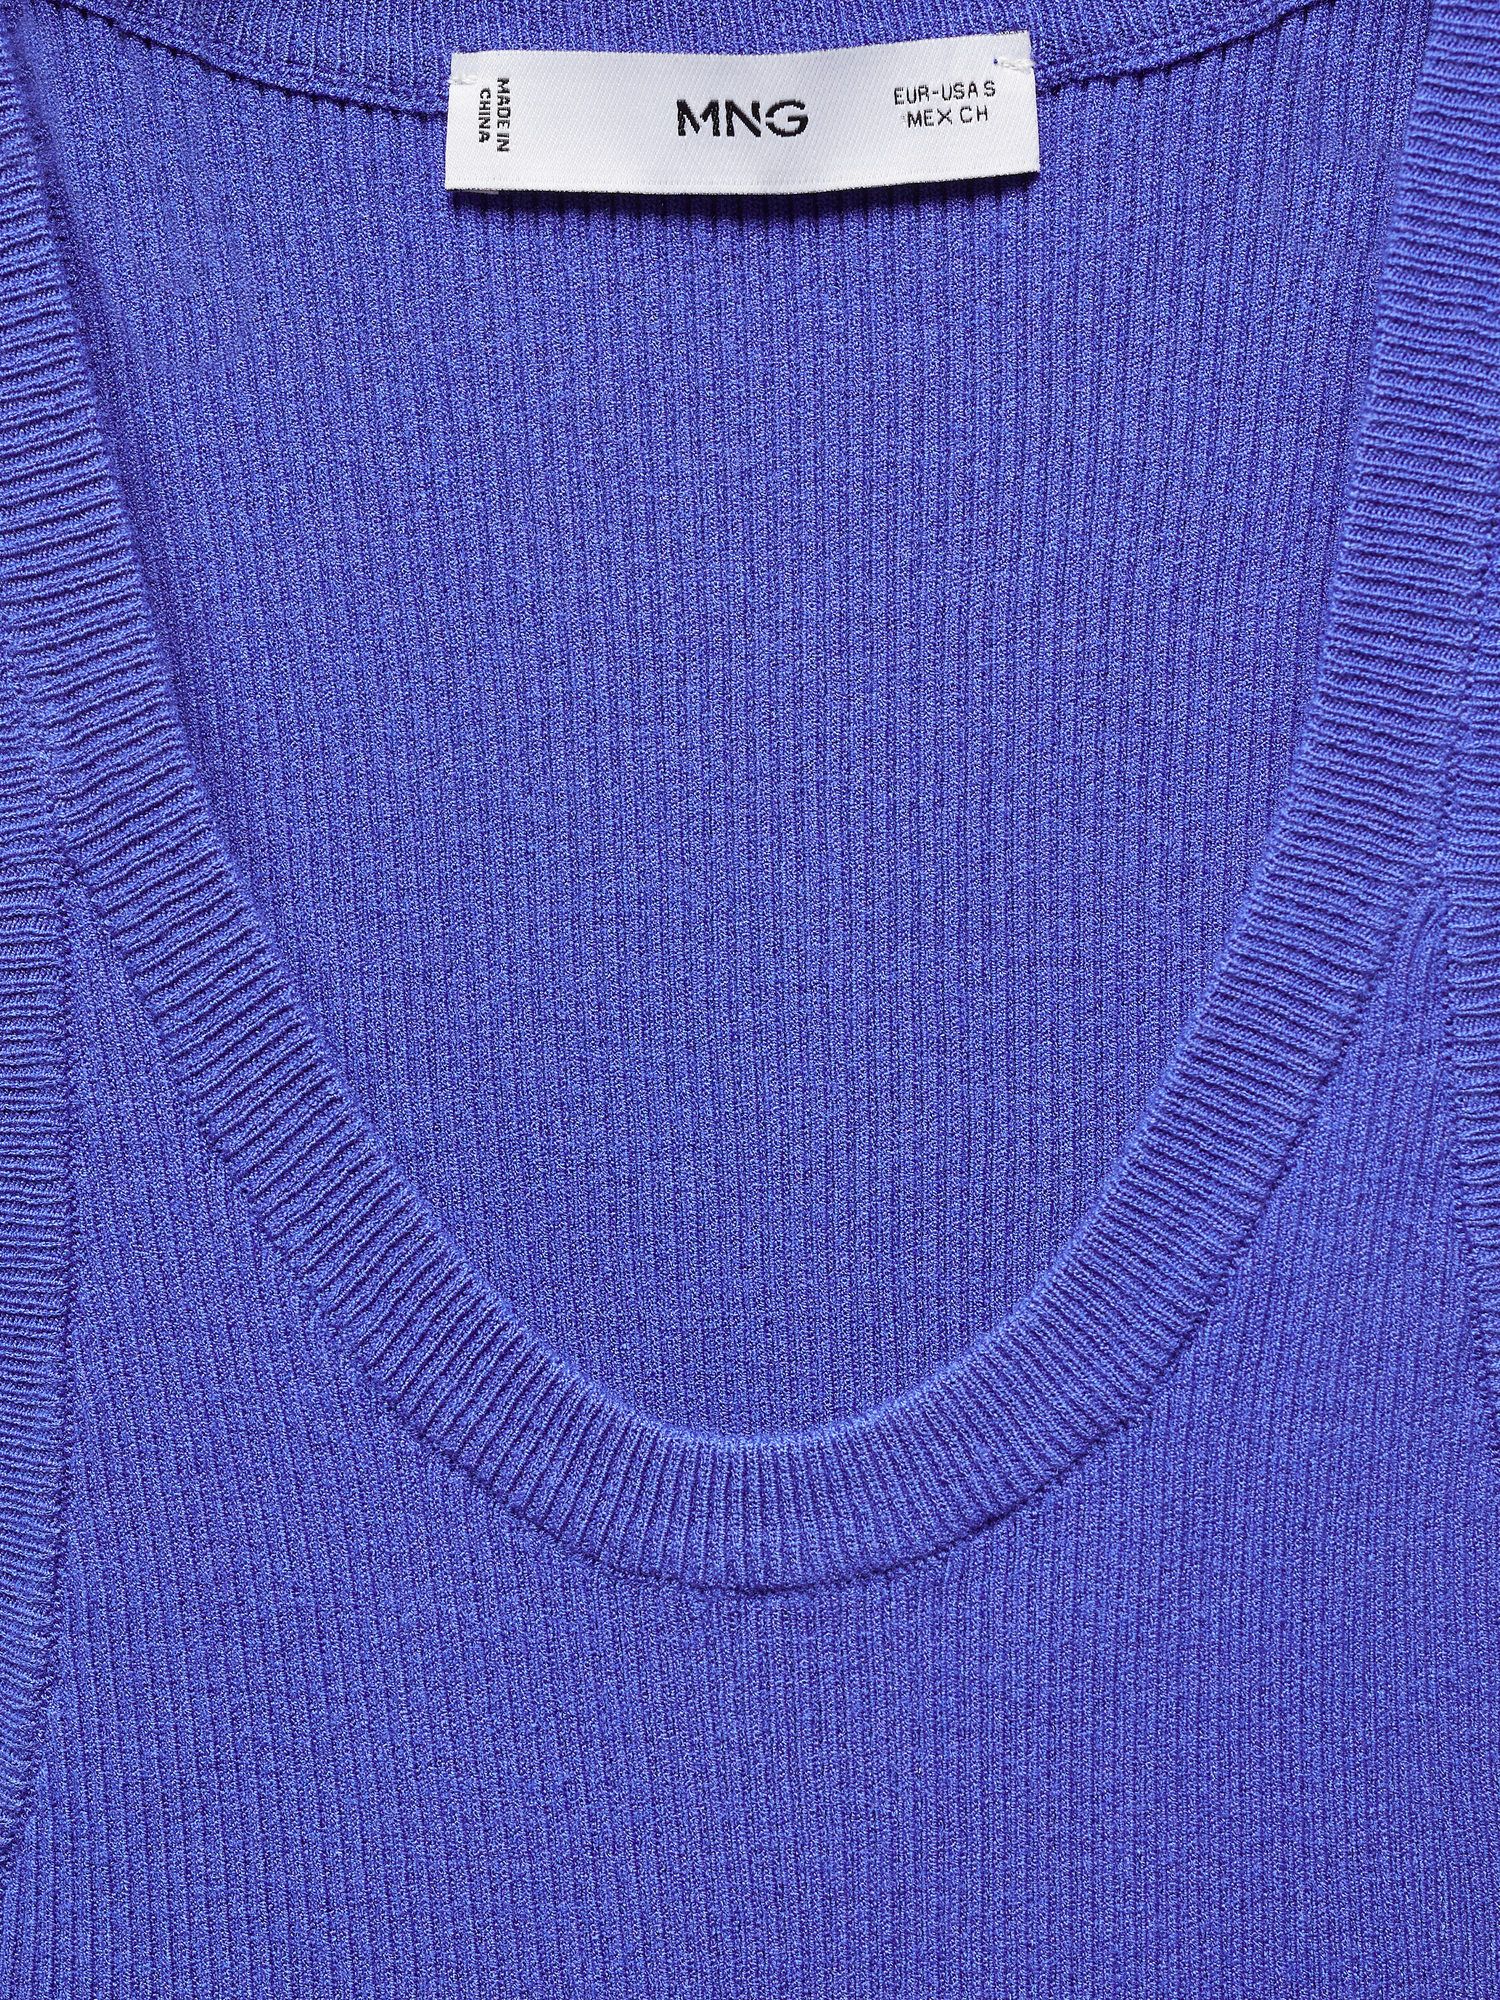 Mango Riri Ribbed Vest Top, Bright Blue, L